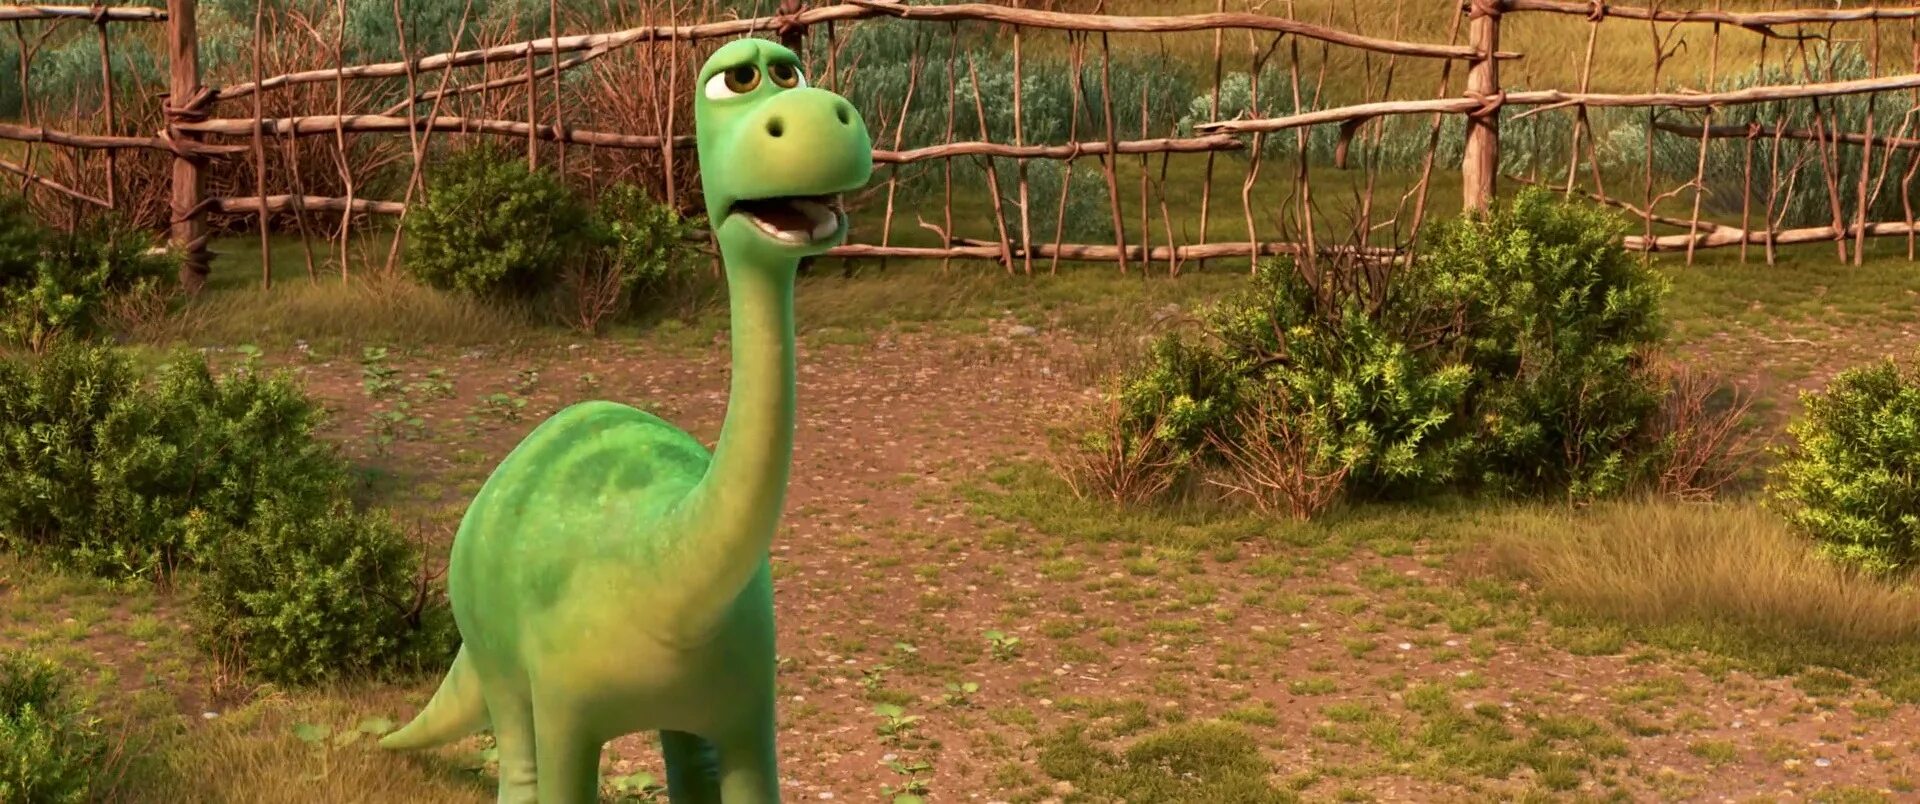 Хороший динозавр (2015):. Хороший динозавр Арло. Мой маленький динозавр. Динозаврами 2015